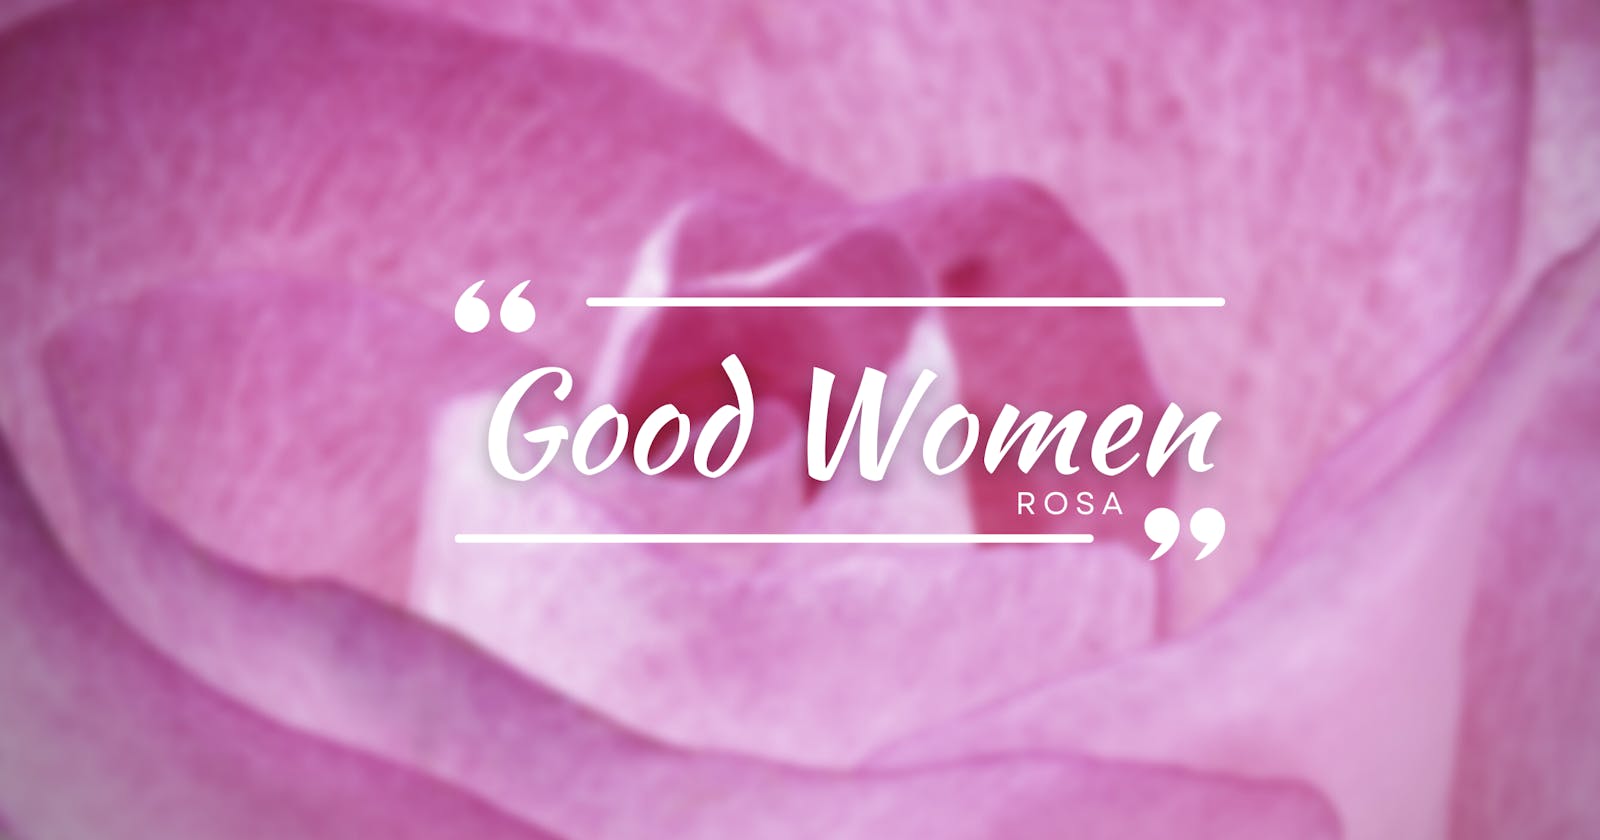 Good Women by Rosa